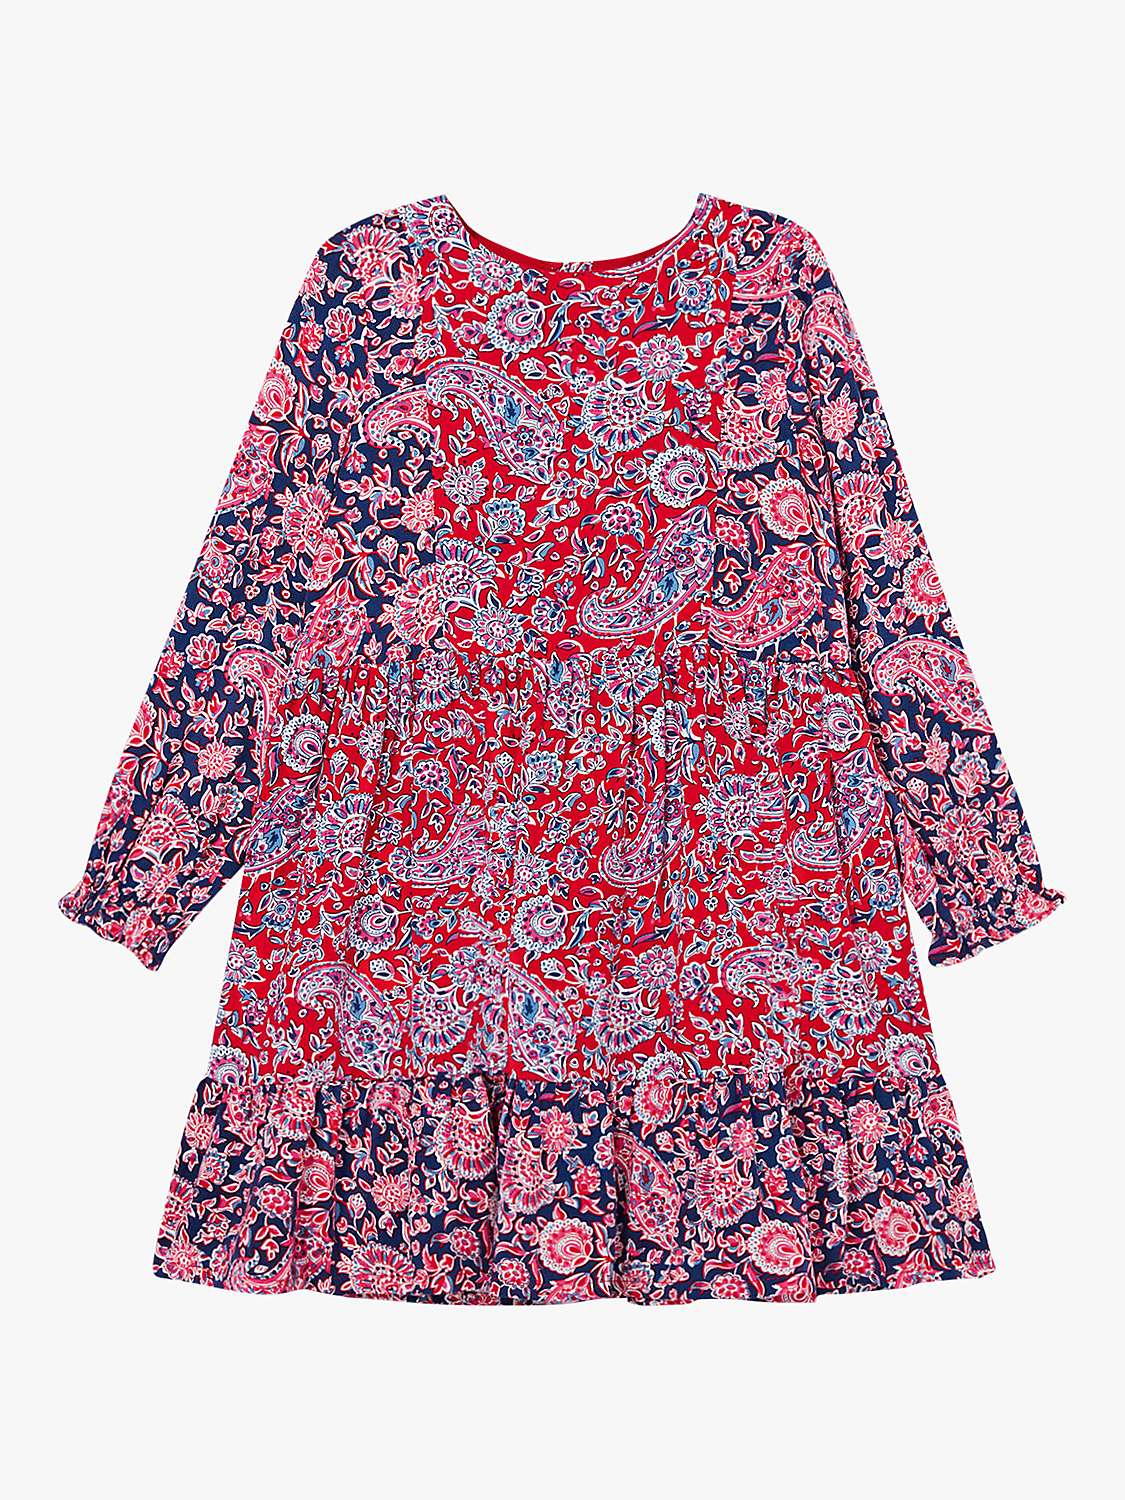 Du Pareil au même Kids' Floral Paisley Printed Dress, Red/Navy at John ...